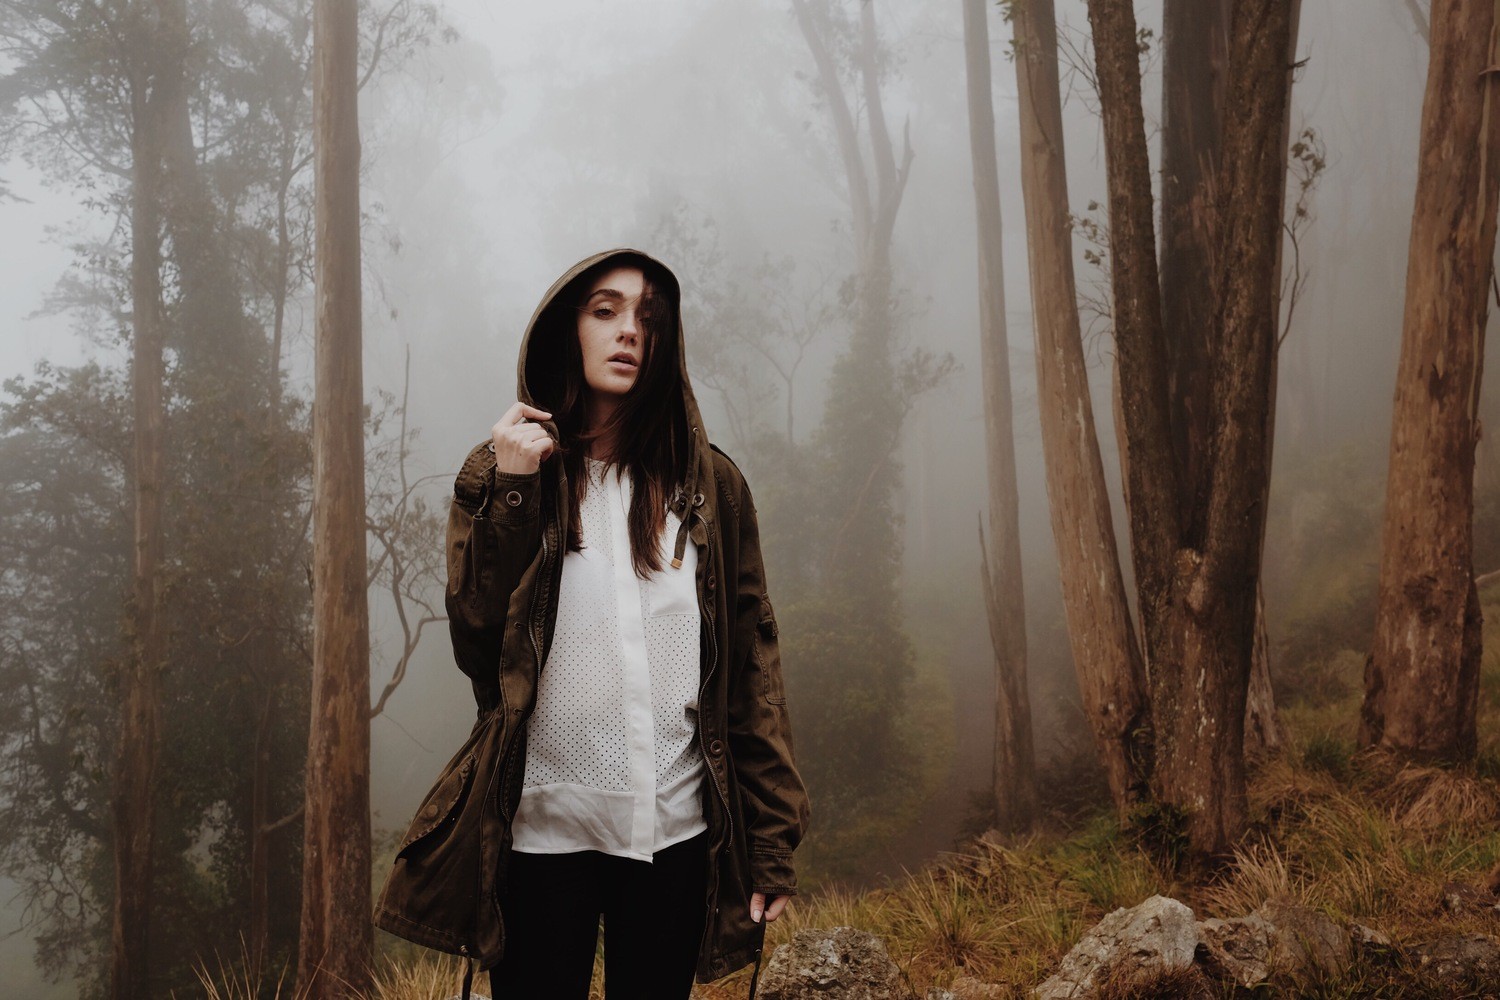 Women Women Outdoors Trees Forest Mist Hoods Introvert Brunette Looking At Viewer Jacket 1500x1000